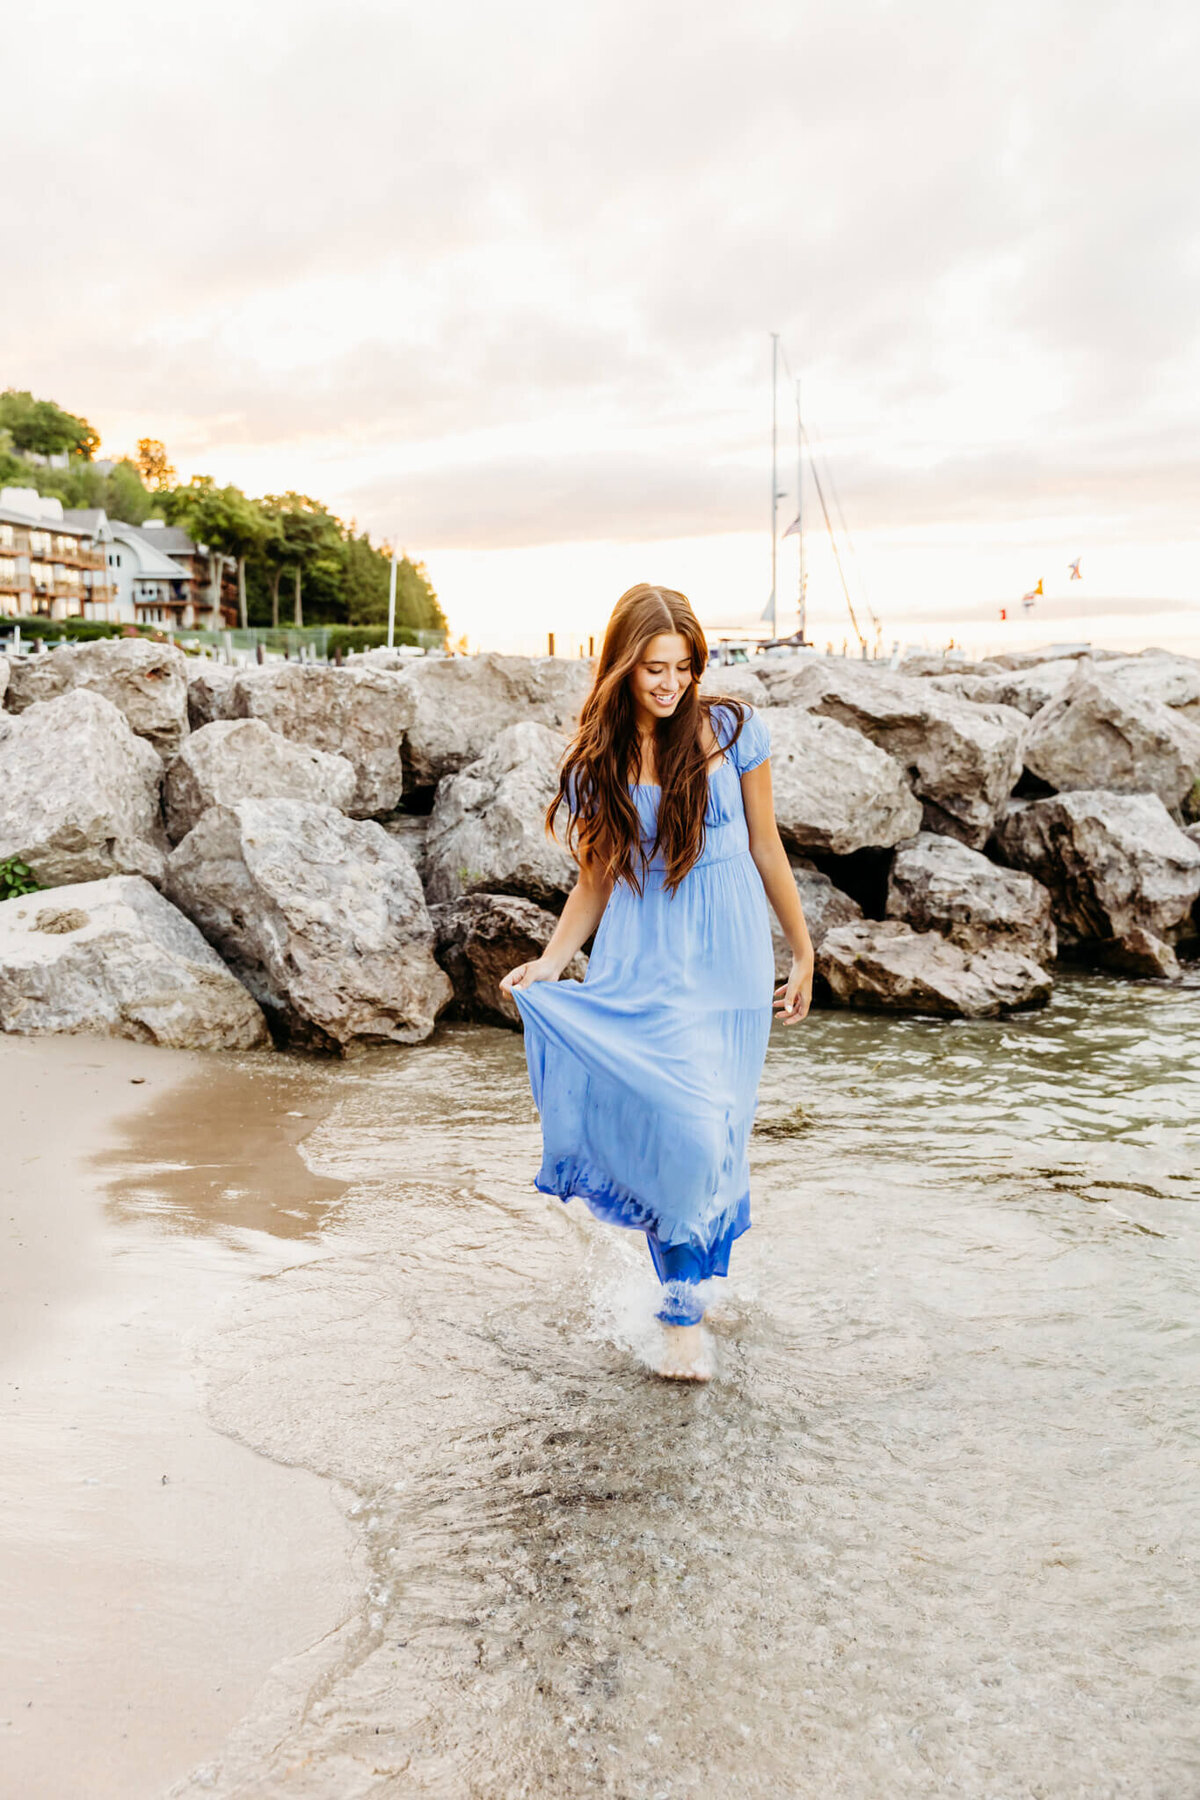 brunette girl kicking up the water as she walks along the beach in Oshkosh